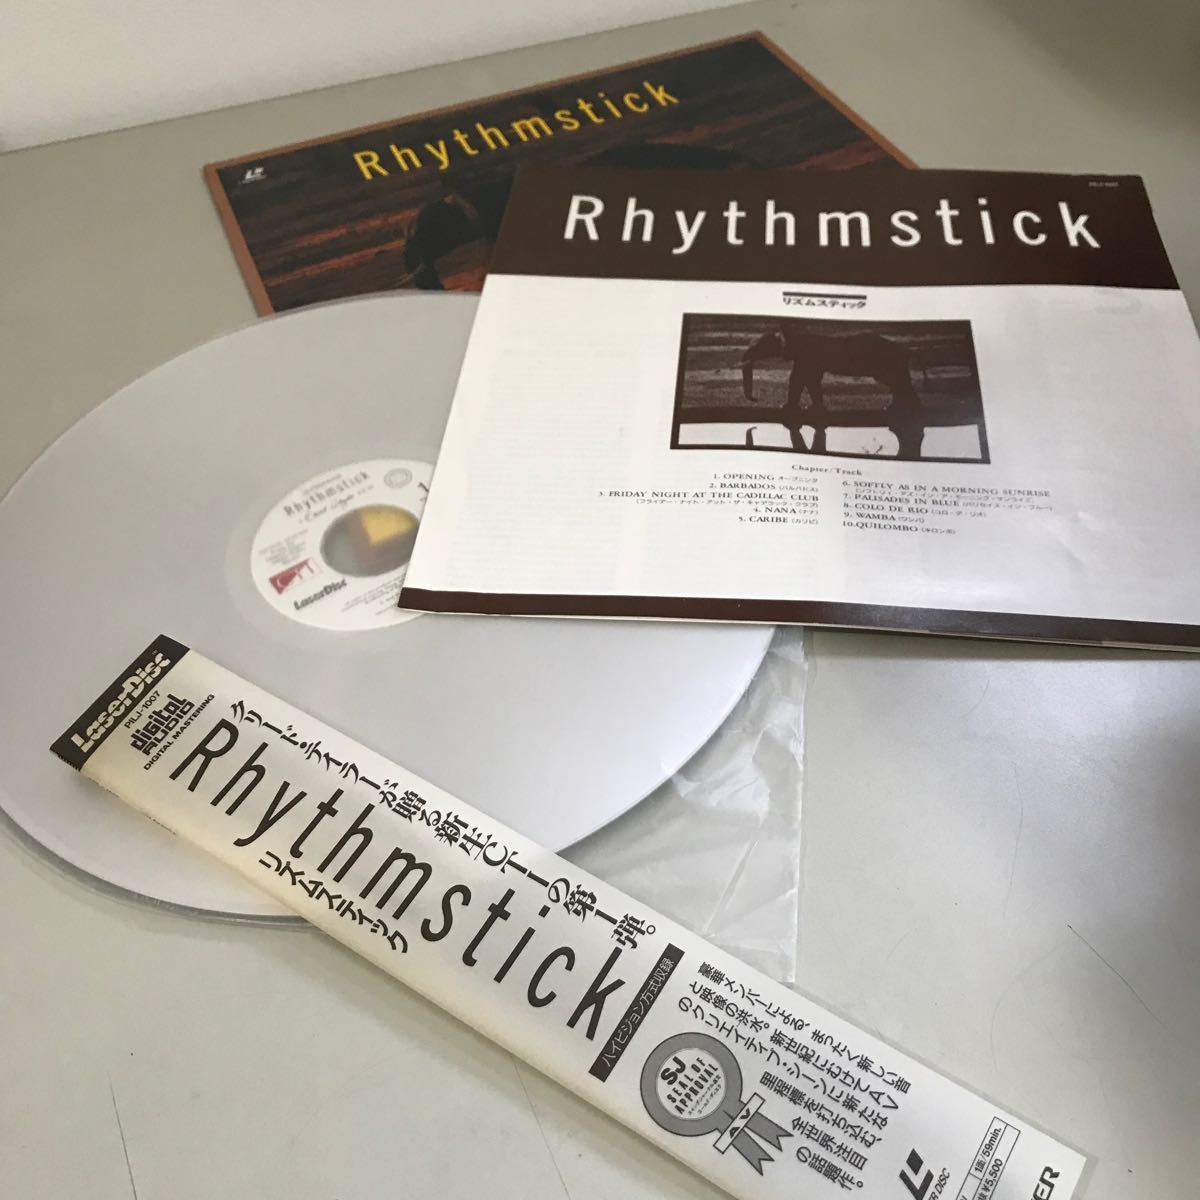  laser disk *Rhythmstick rhythm stick *k Lead Taylor ... rebirth CTI. the first .PILJ-1007 LD *A3367-8